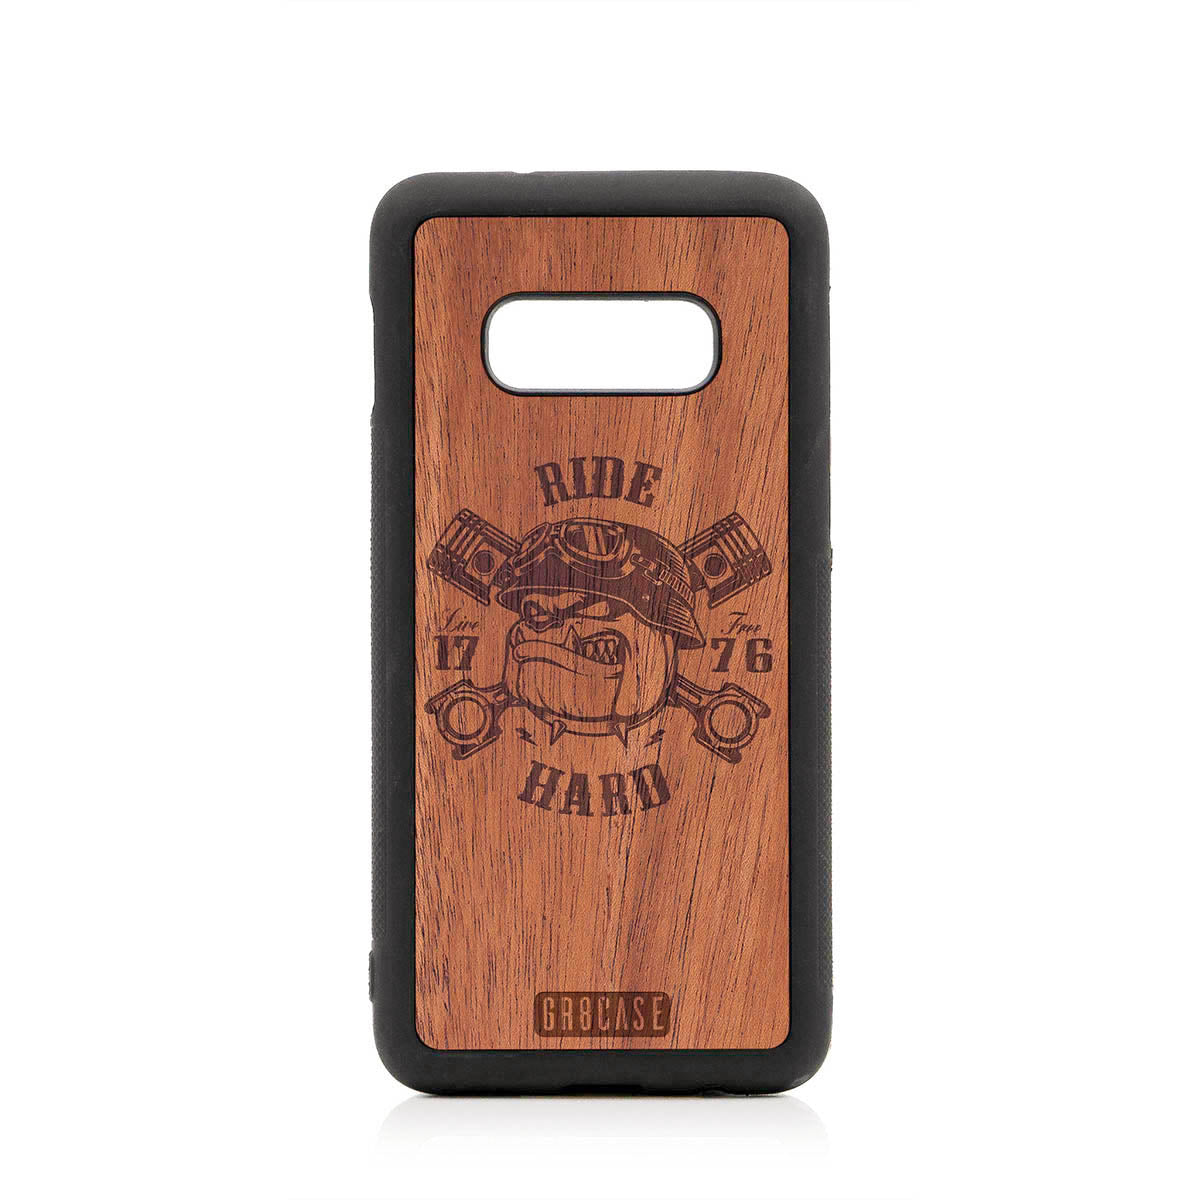 Ride Hard Live Free (Biker Dog) Design Wood Case For Samsung Galaxy S10E by GR8CASE